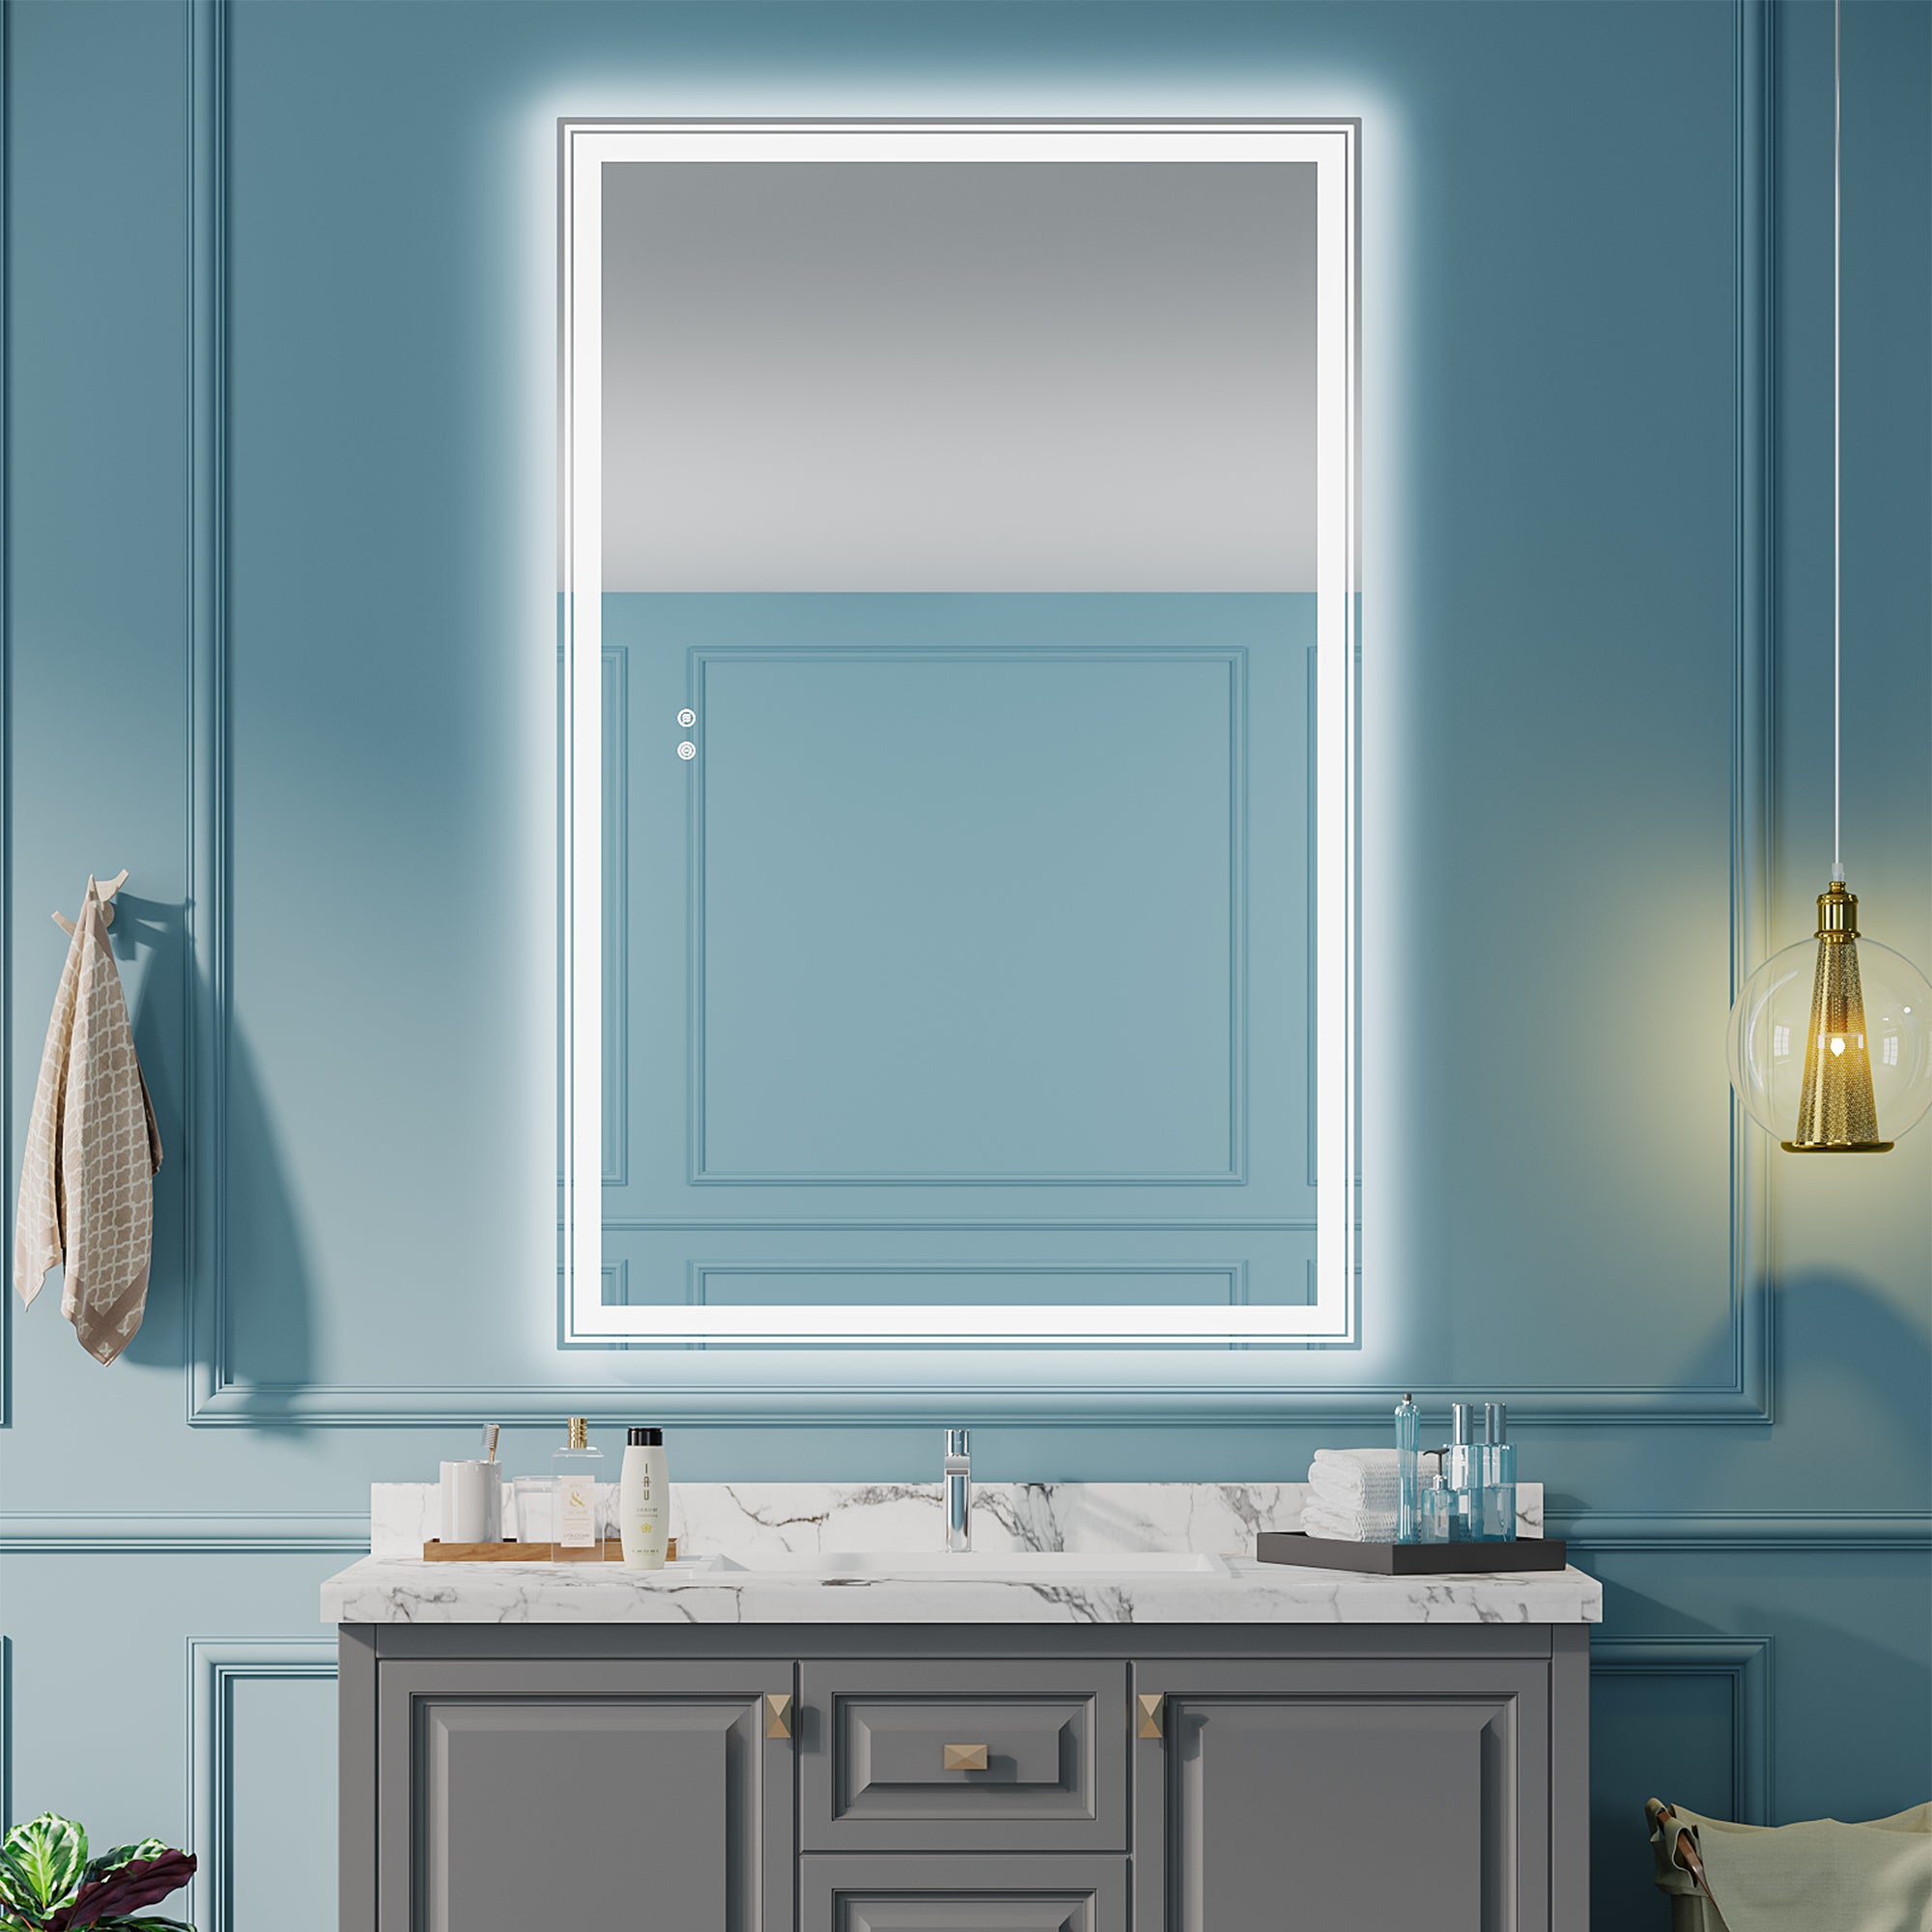 55"×36" inch LED Bathroom Vanity Mirror, Anti-Fog Memory, Adjustable Brightness